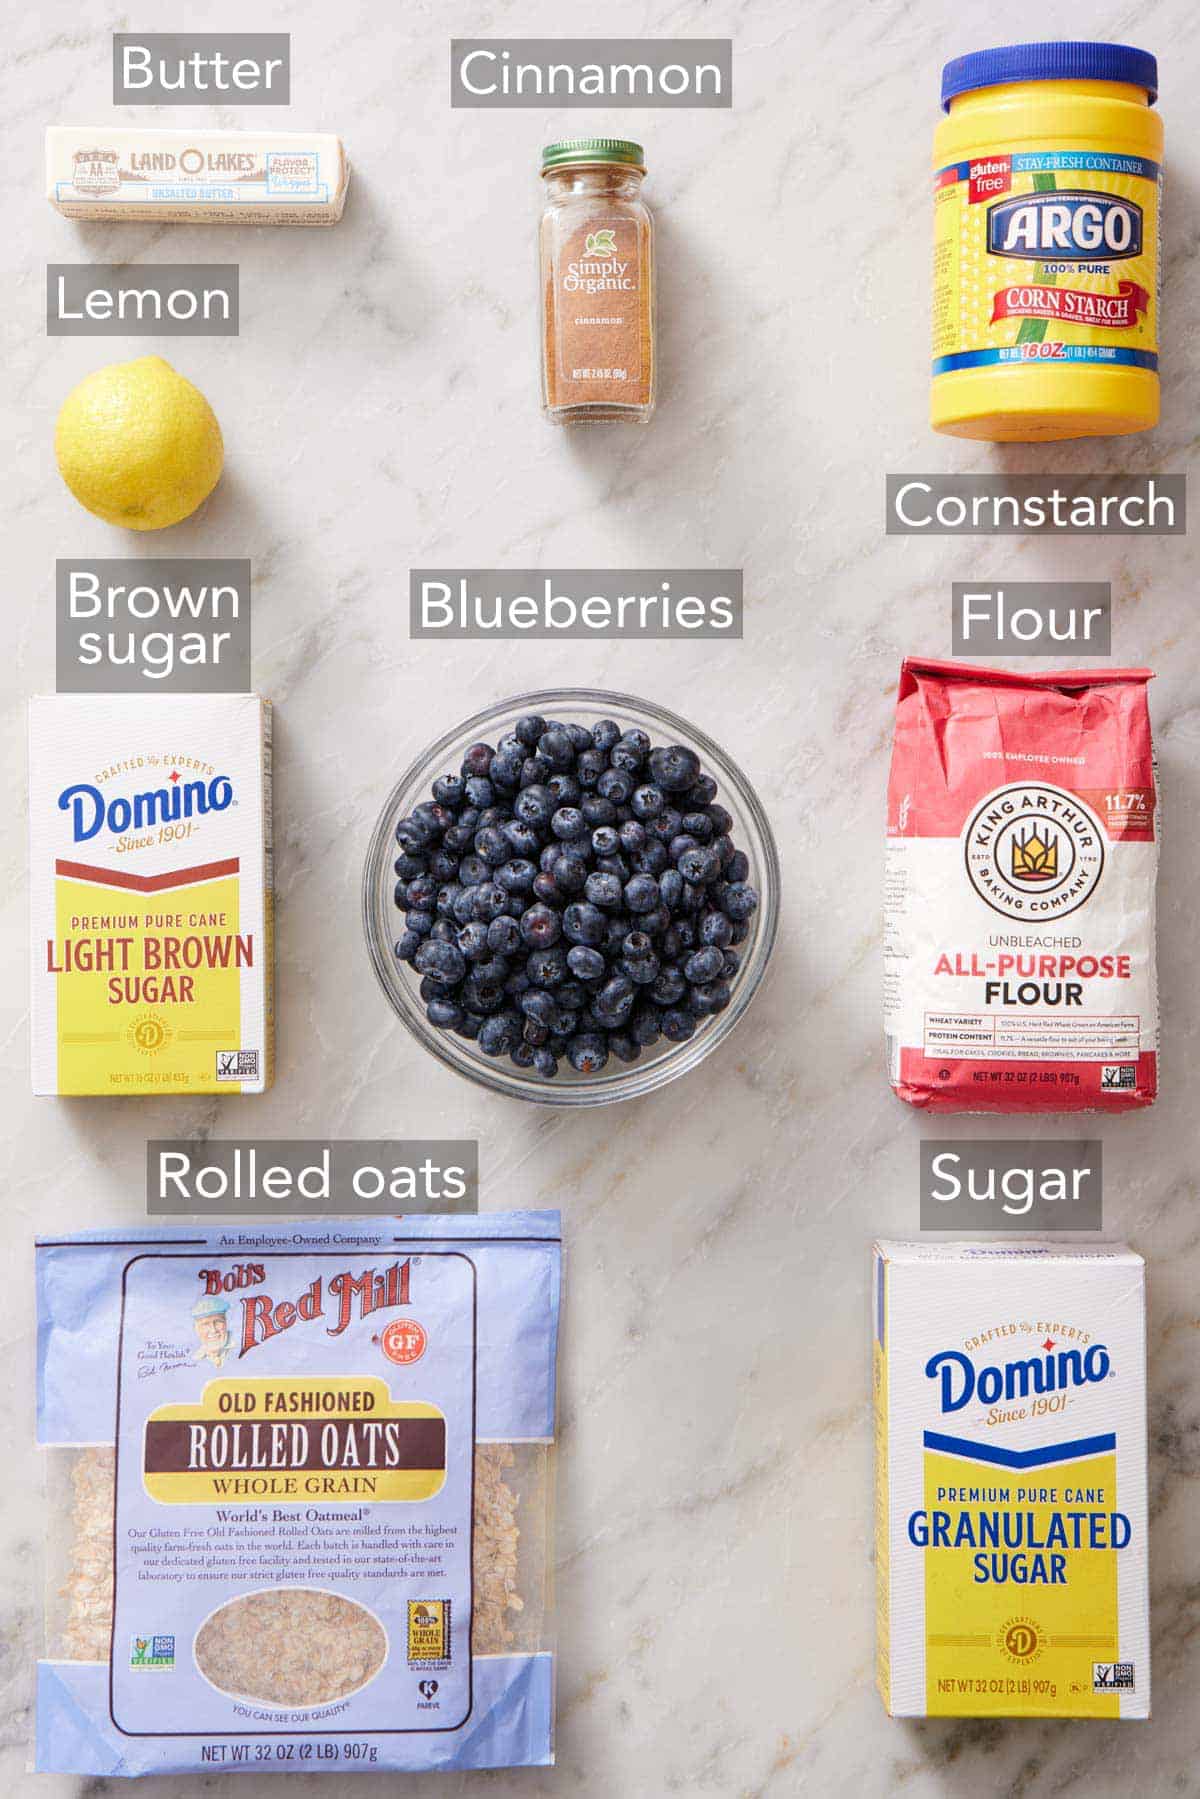 Ingredients needed to make blueberry crisp.